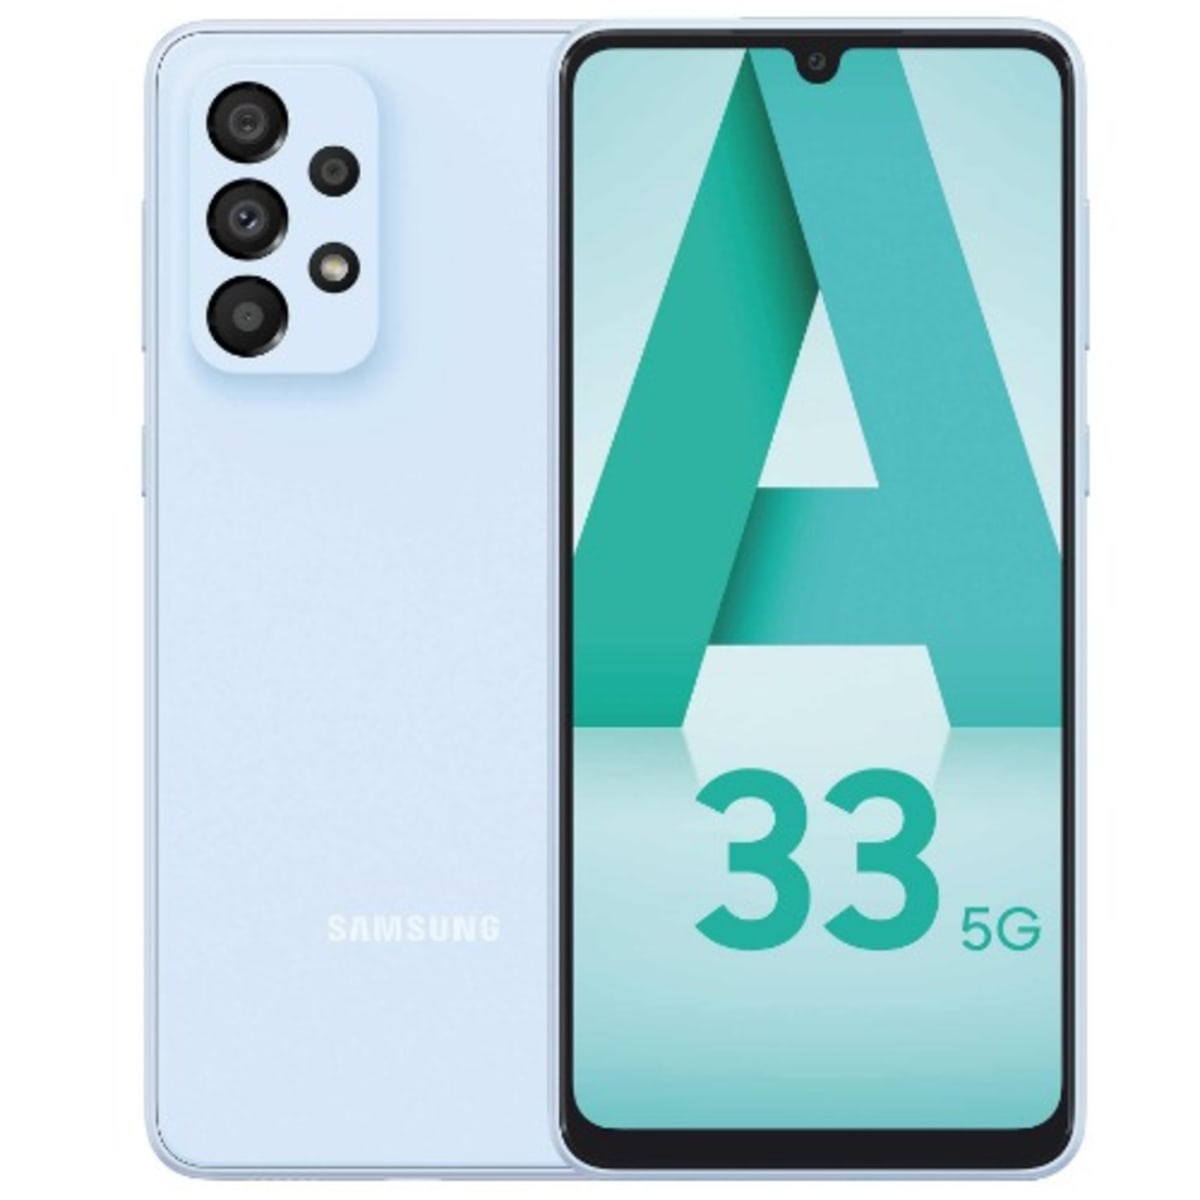 Samsung Galaxy A33 5G, Samsung